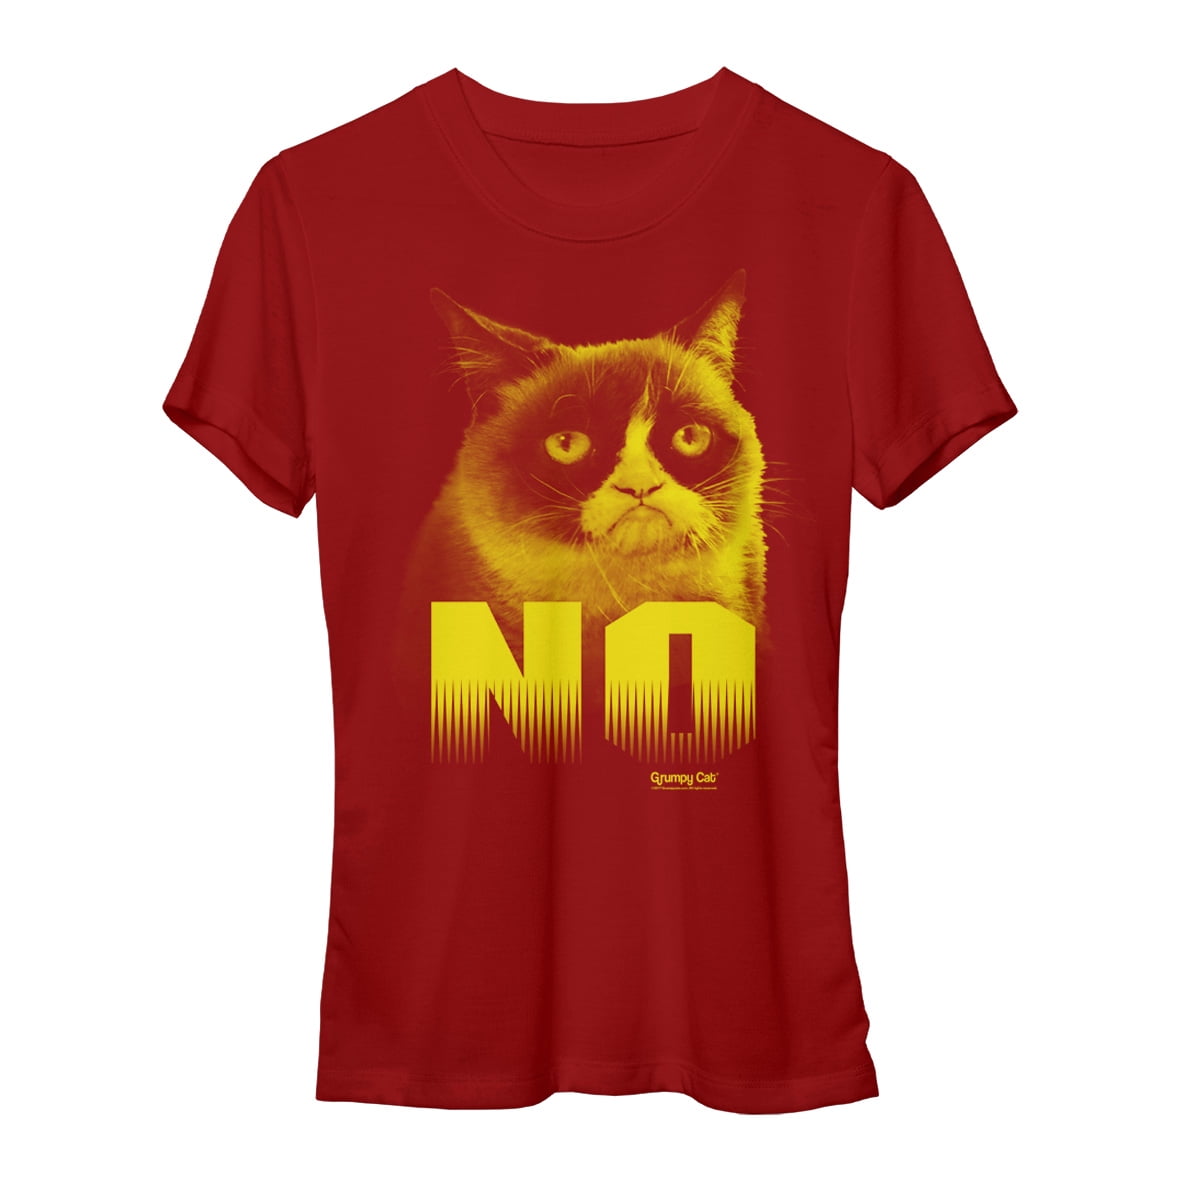 Grumpy Cat No Women's Red T-shirt NEW Sizes S-2XL - Walmart.com